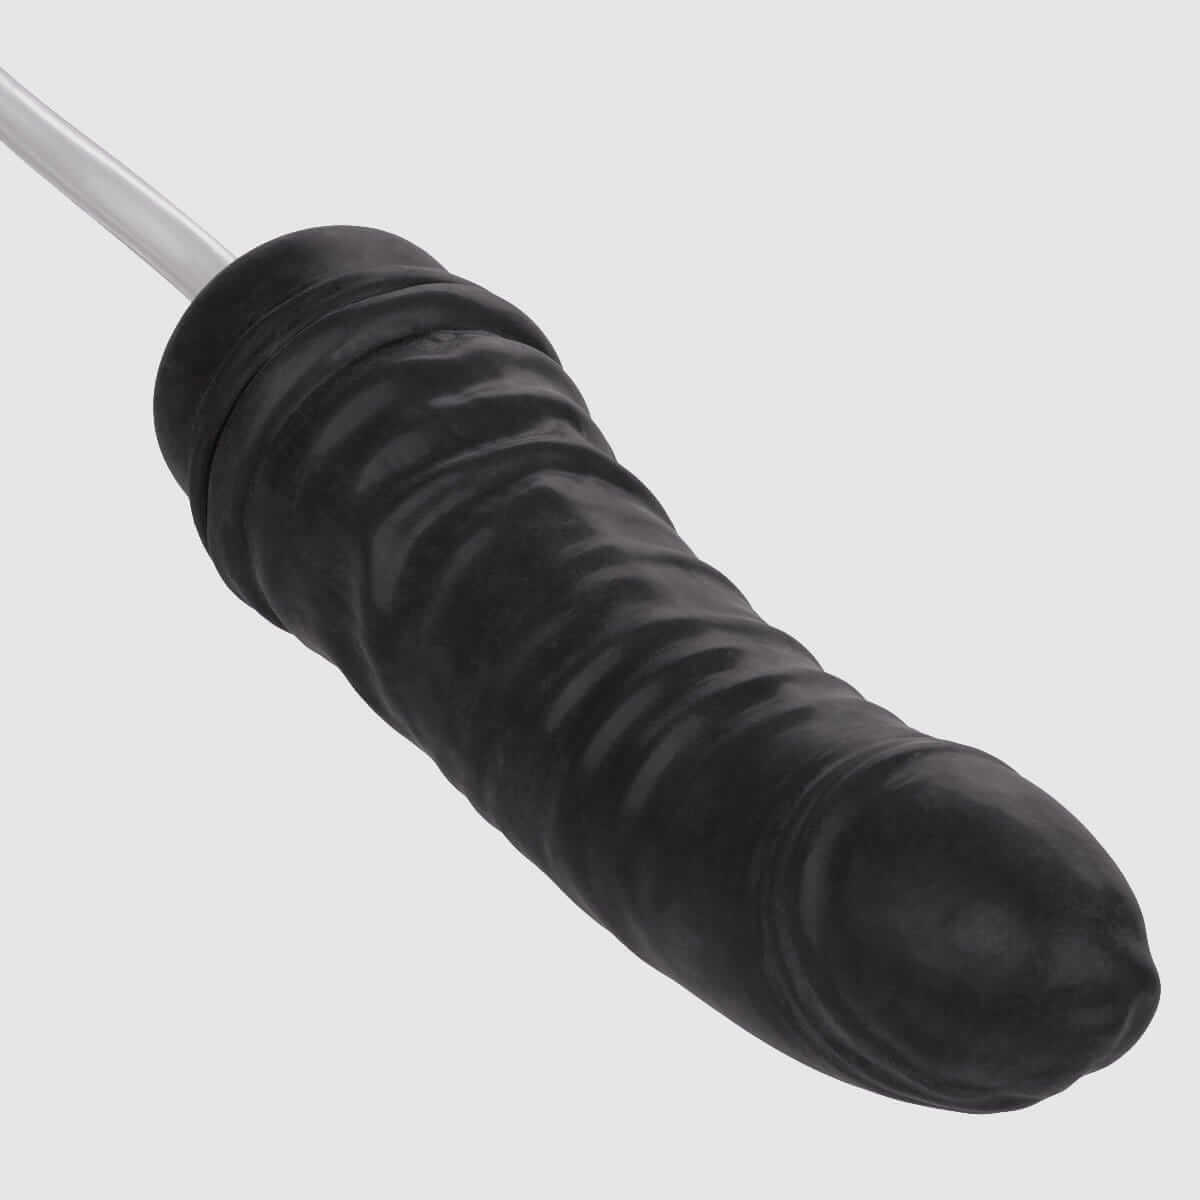 Colt Hefty Probe Inflatable Butt Plug - Black - Thorn & Feather